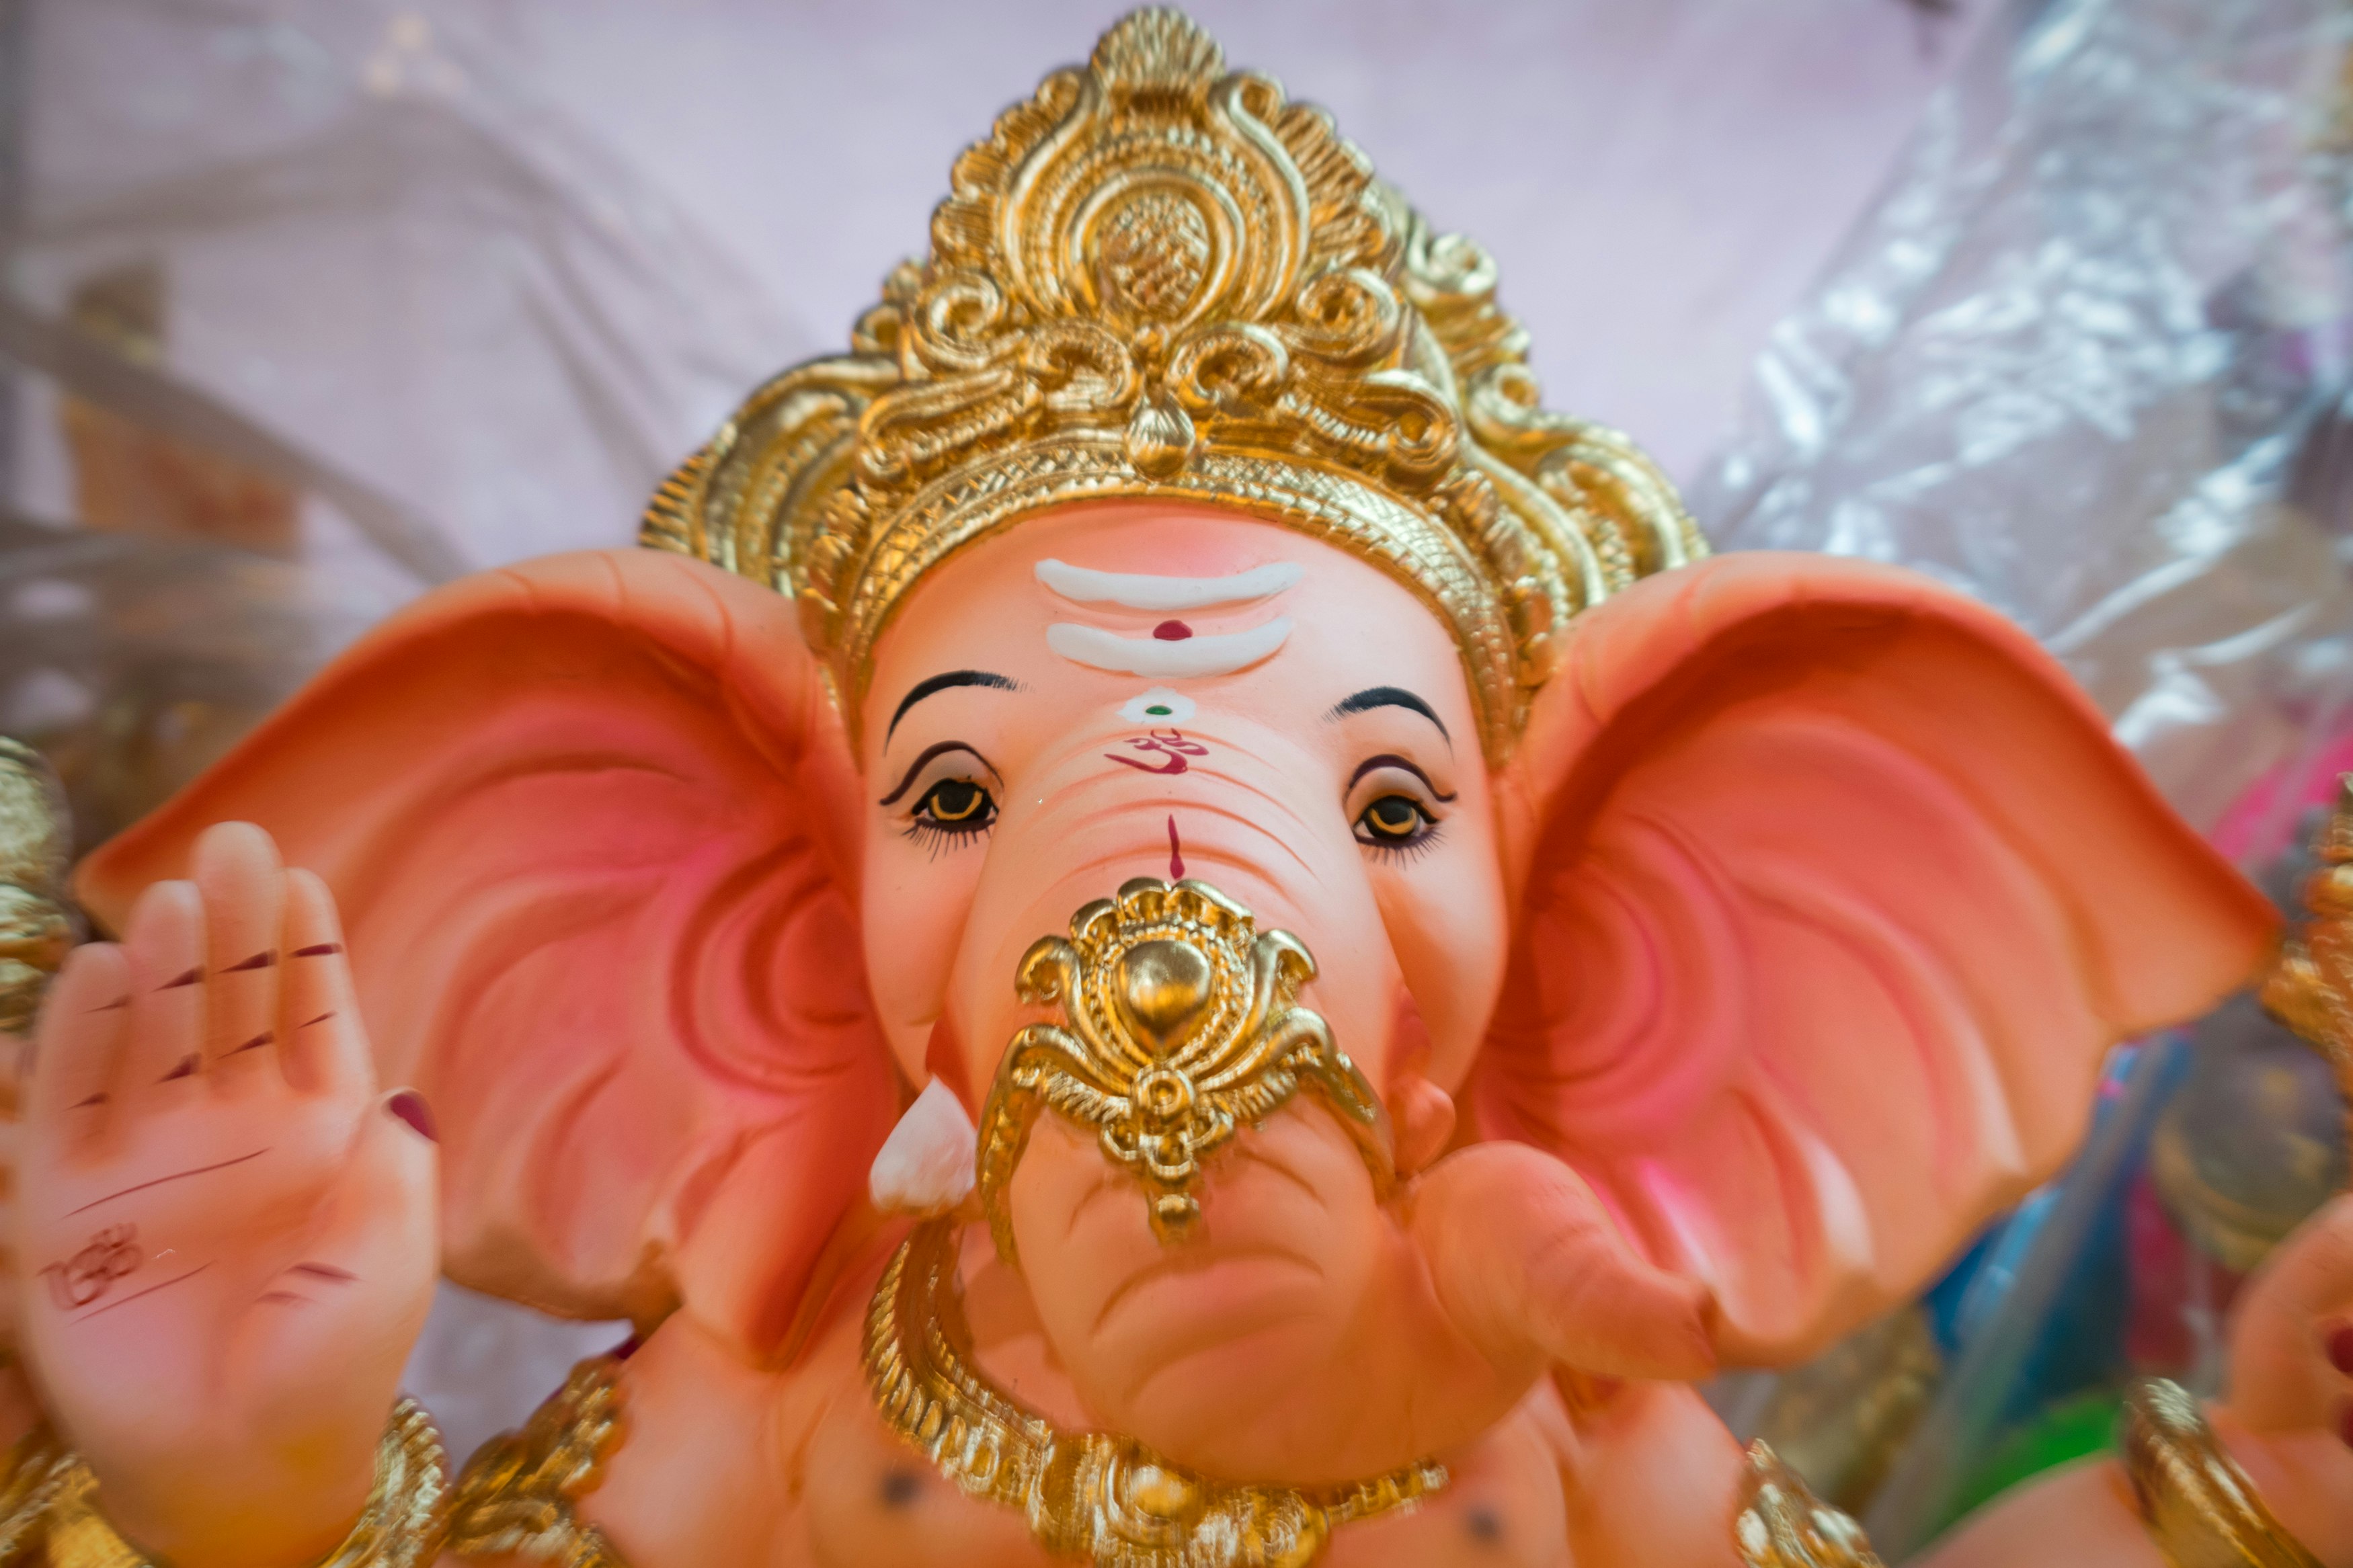 gold and pink hindu deity figurine